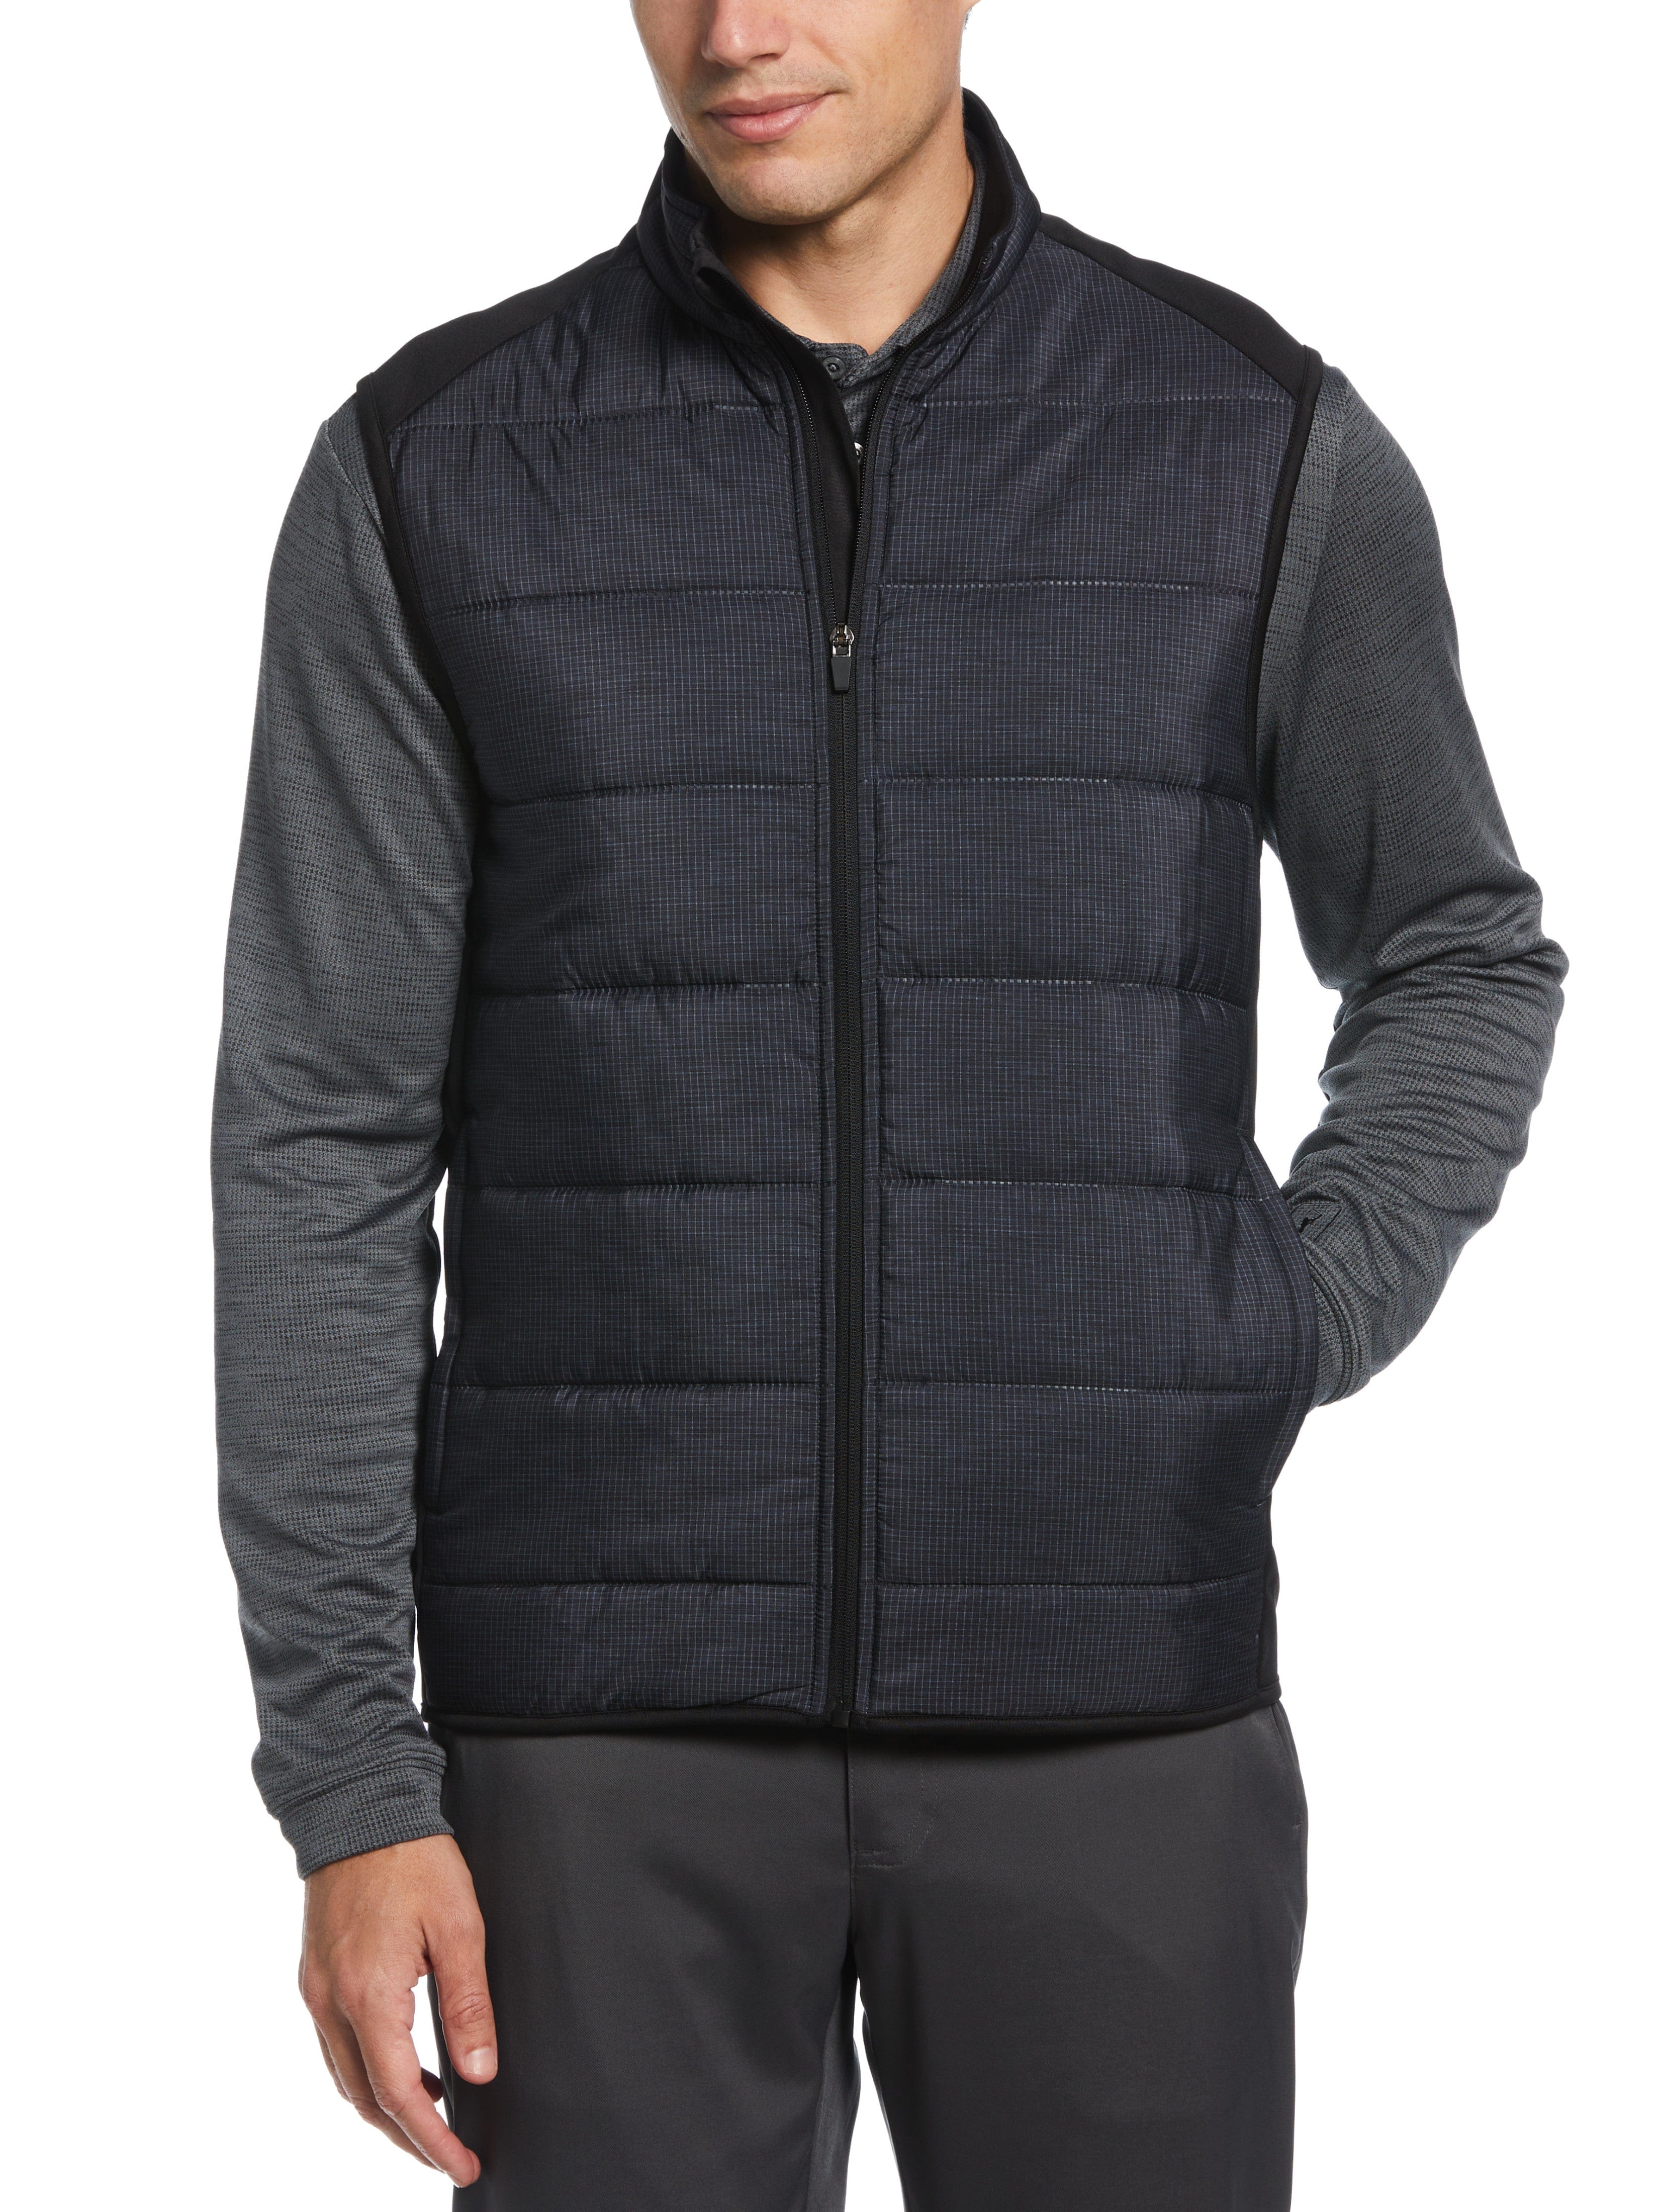 PGA TOUR Apparel Mens Ultrasonic Print Full Zip Golf Vest Jacket Top, Size 3XL, Black, 100% Polyester | Golf Apparel Shop